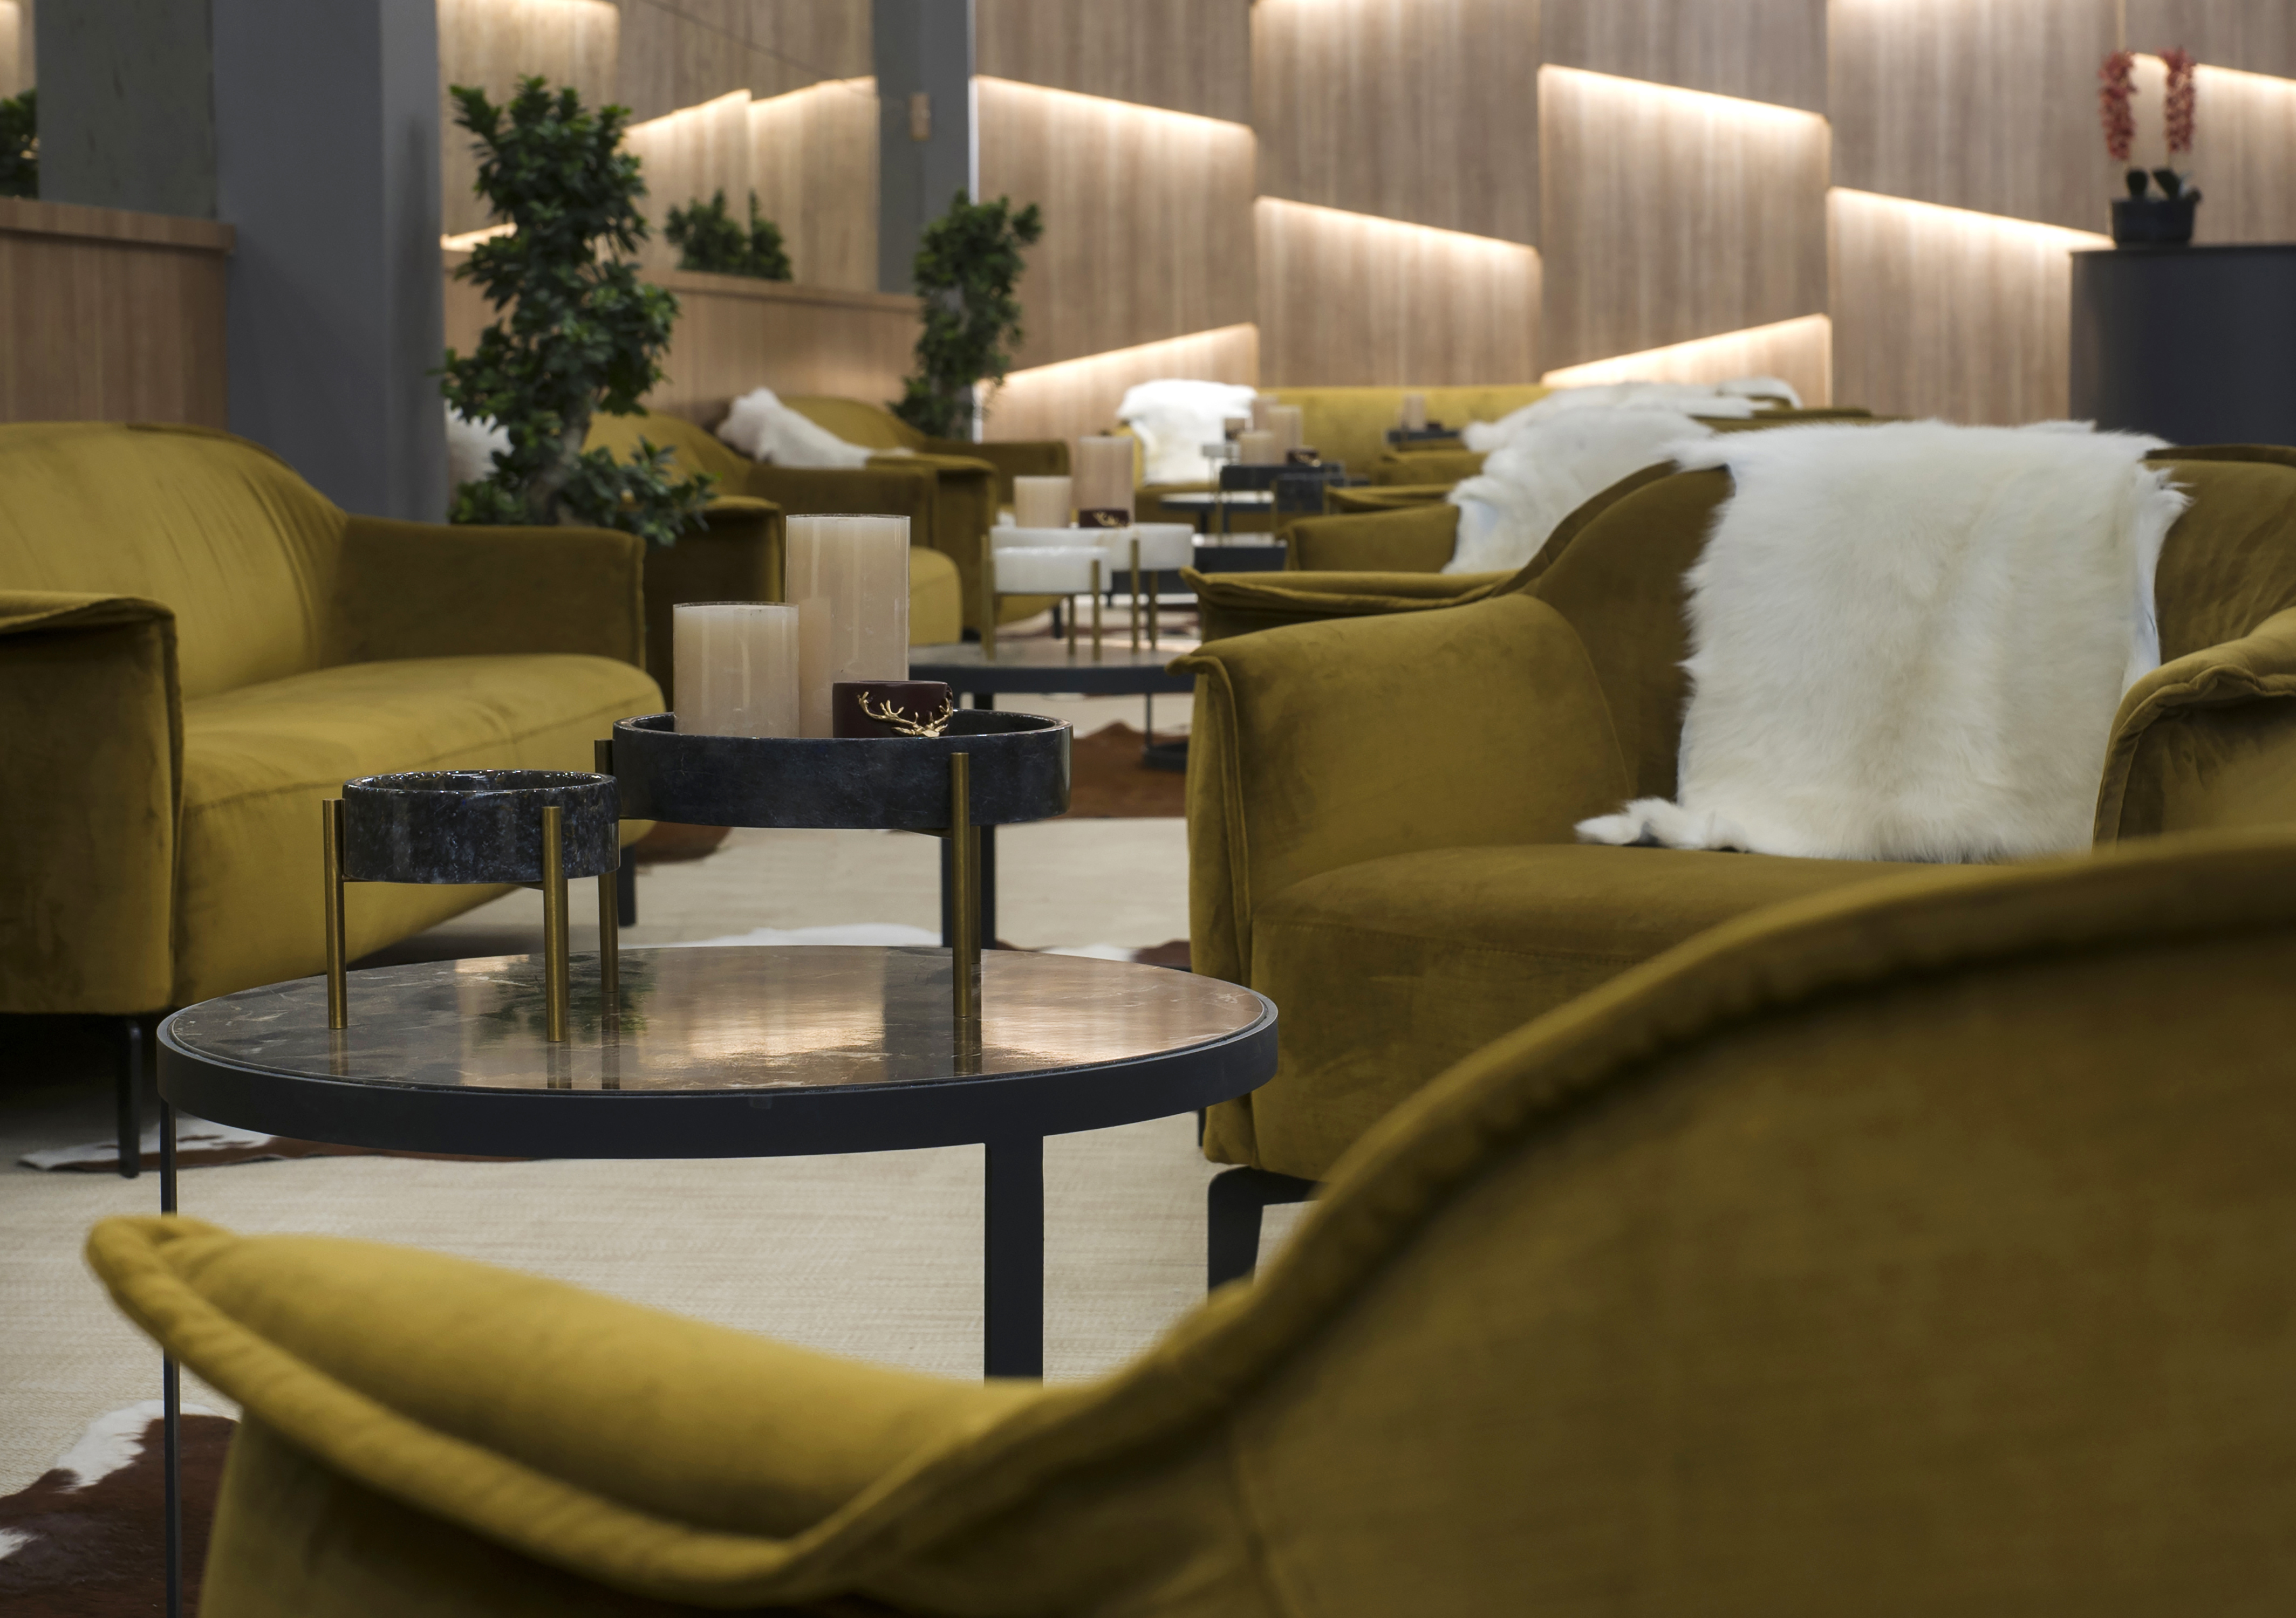 Radisson Blu Hotel Mount Erciyes lobby details